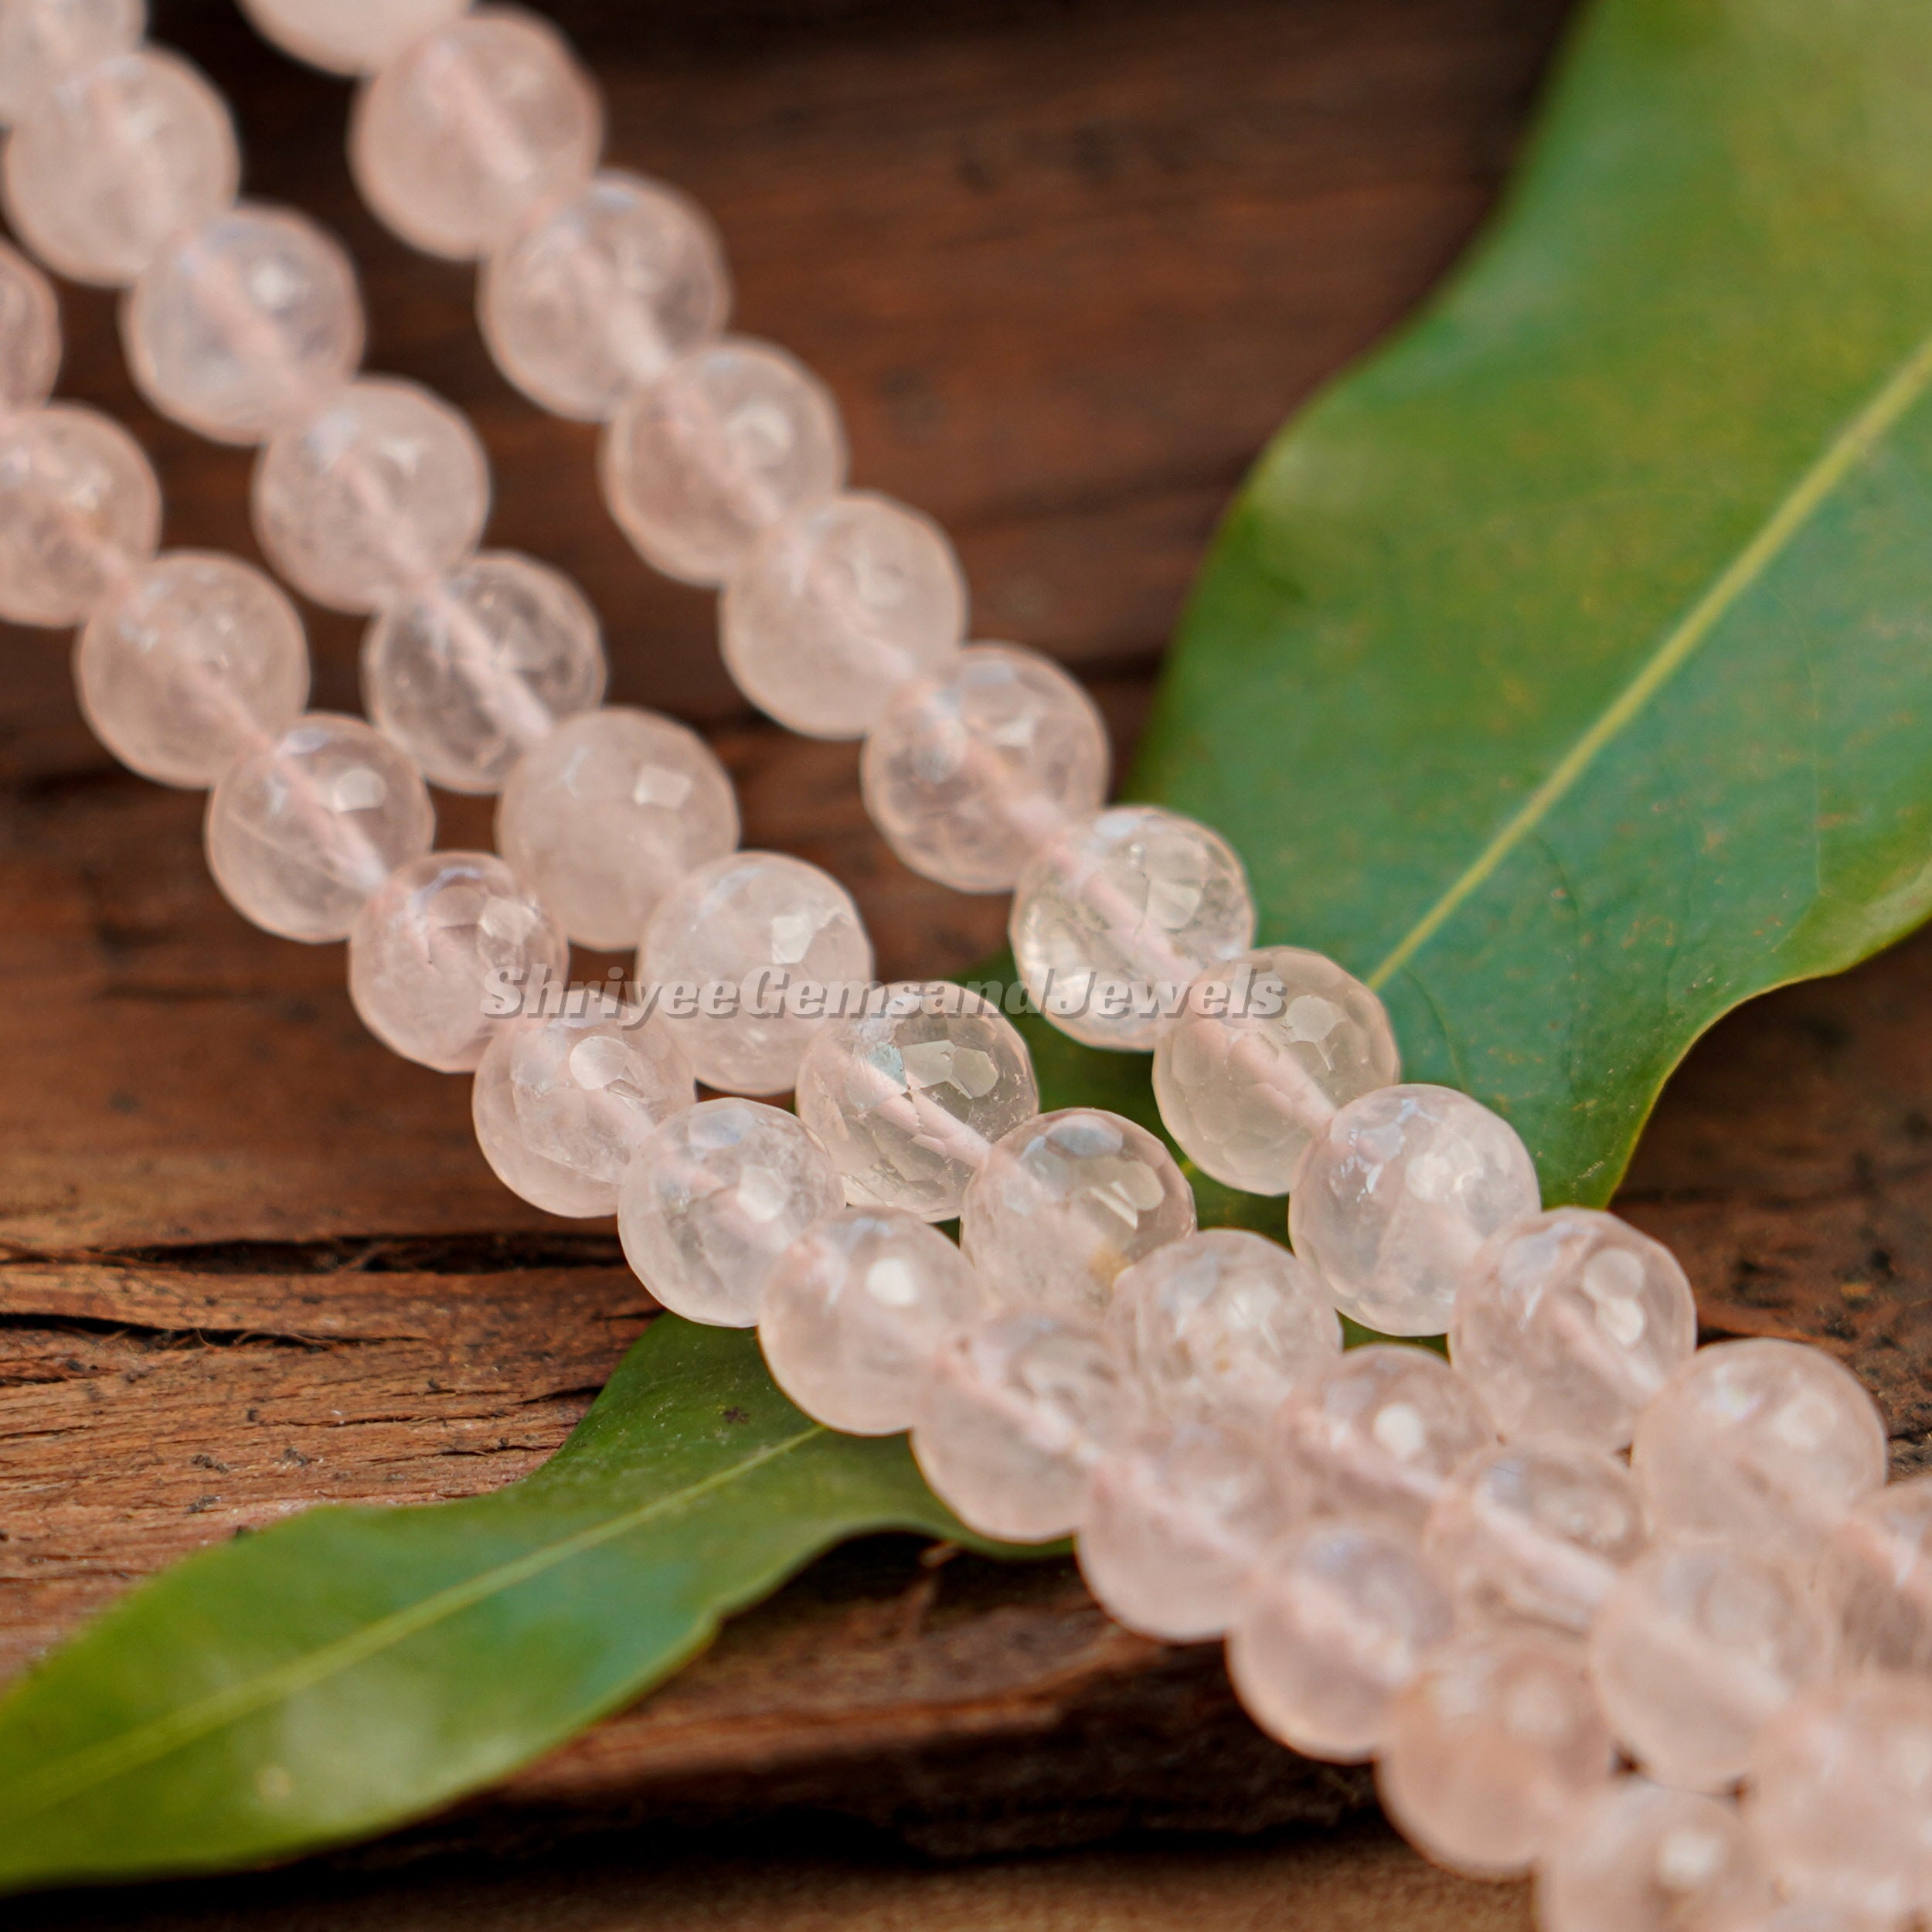 Citrine Stretchy String Bracelet Natural Gemstone Crystal Bracelets